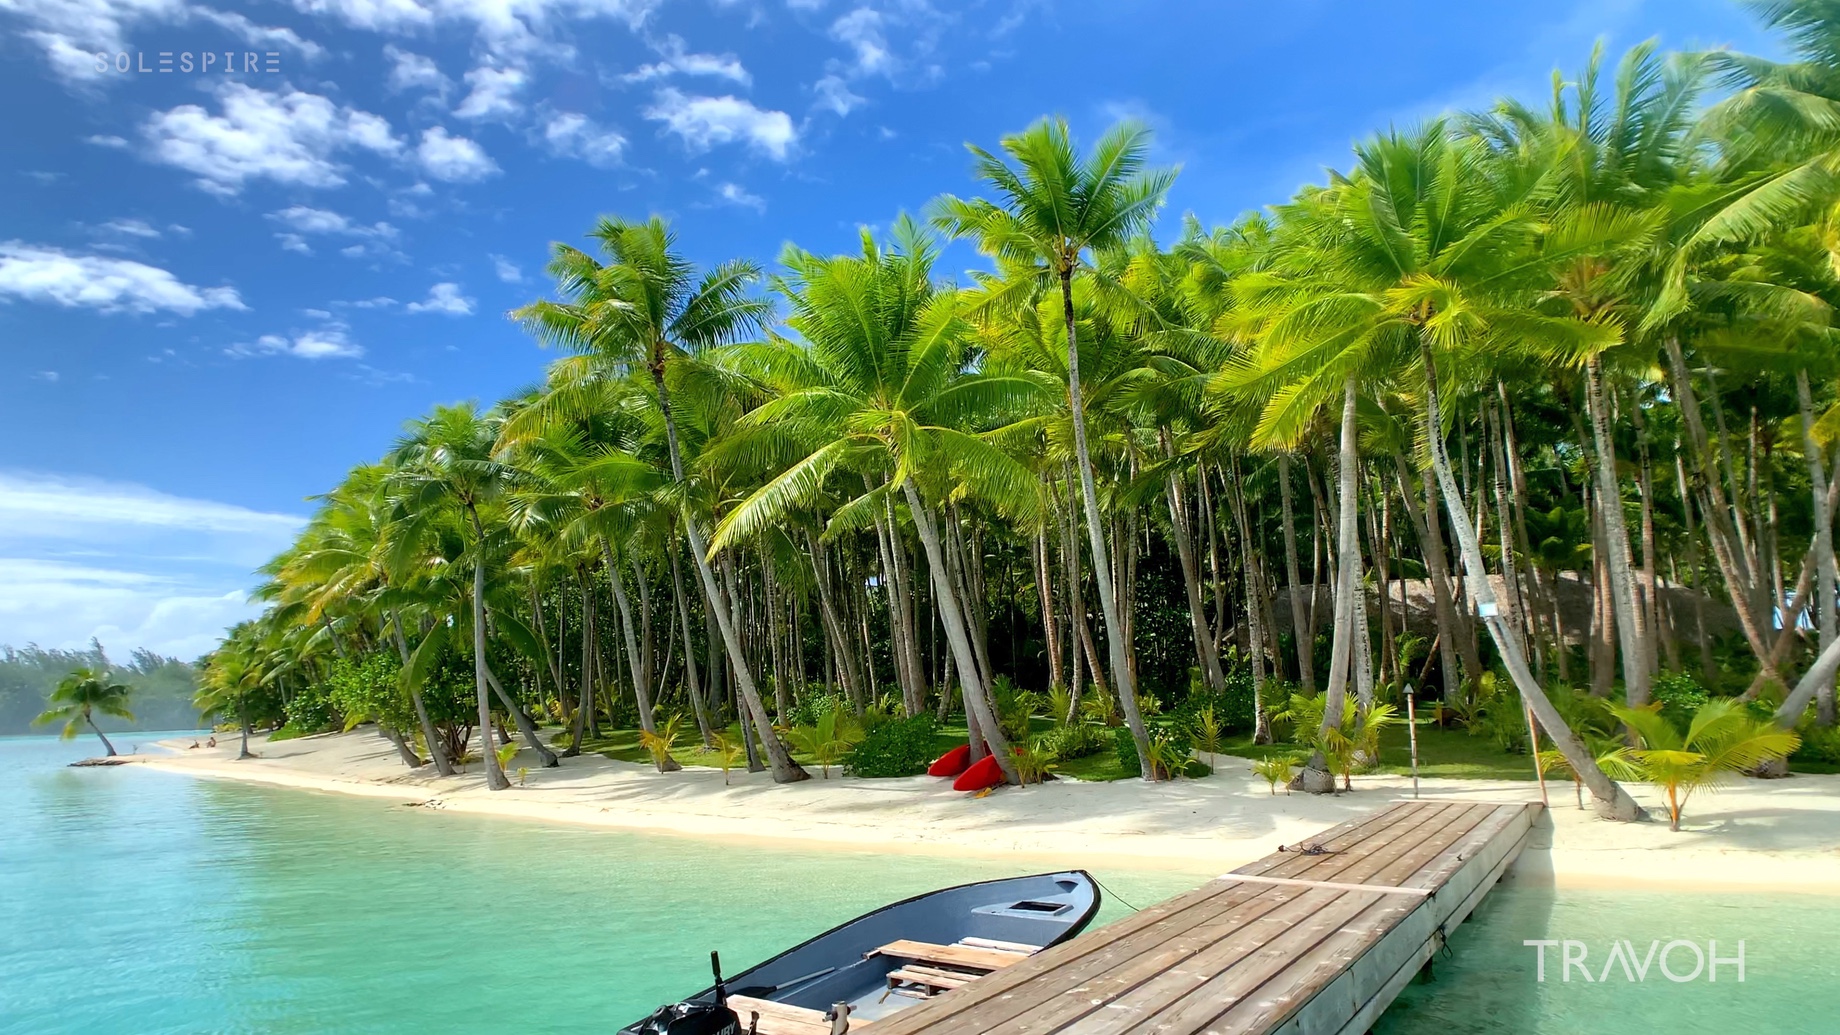 Dream House Music - Exploring Motu Tane Island - Bora Bora, French Polynesia - 4K Travel Video